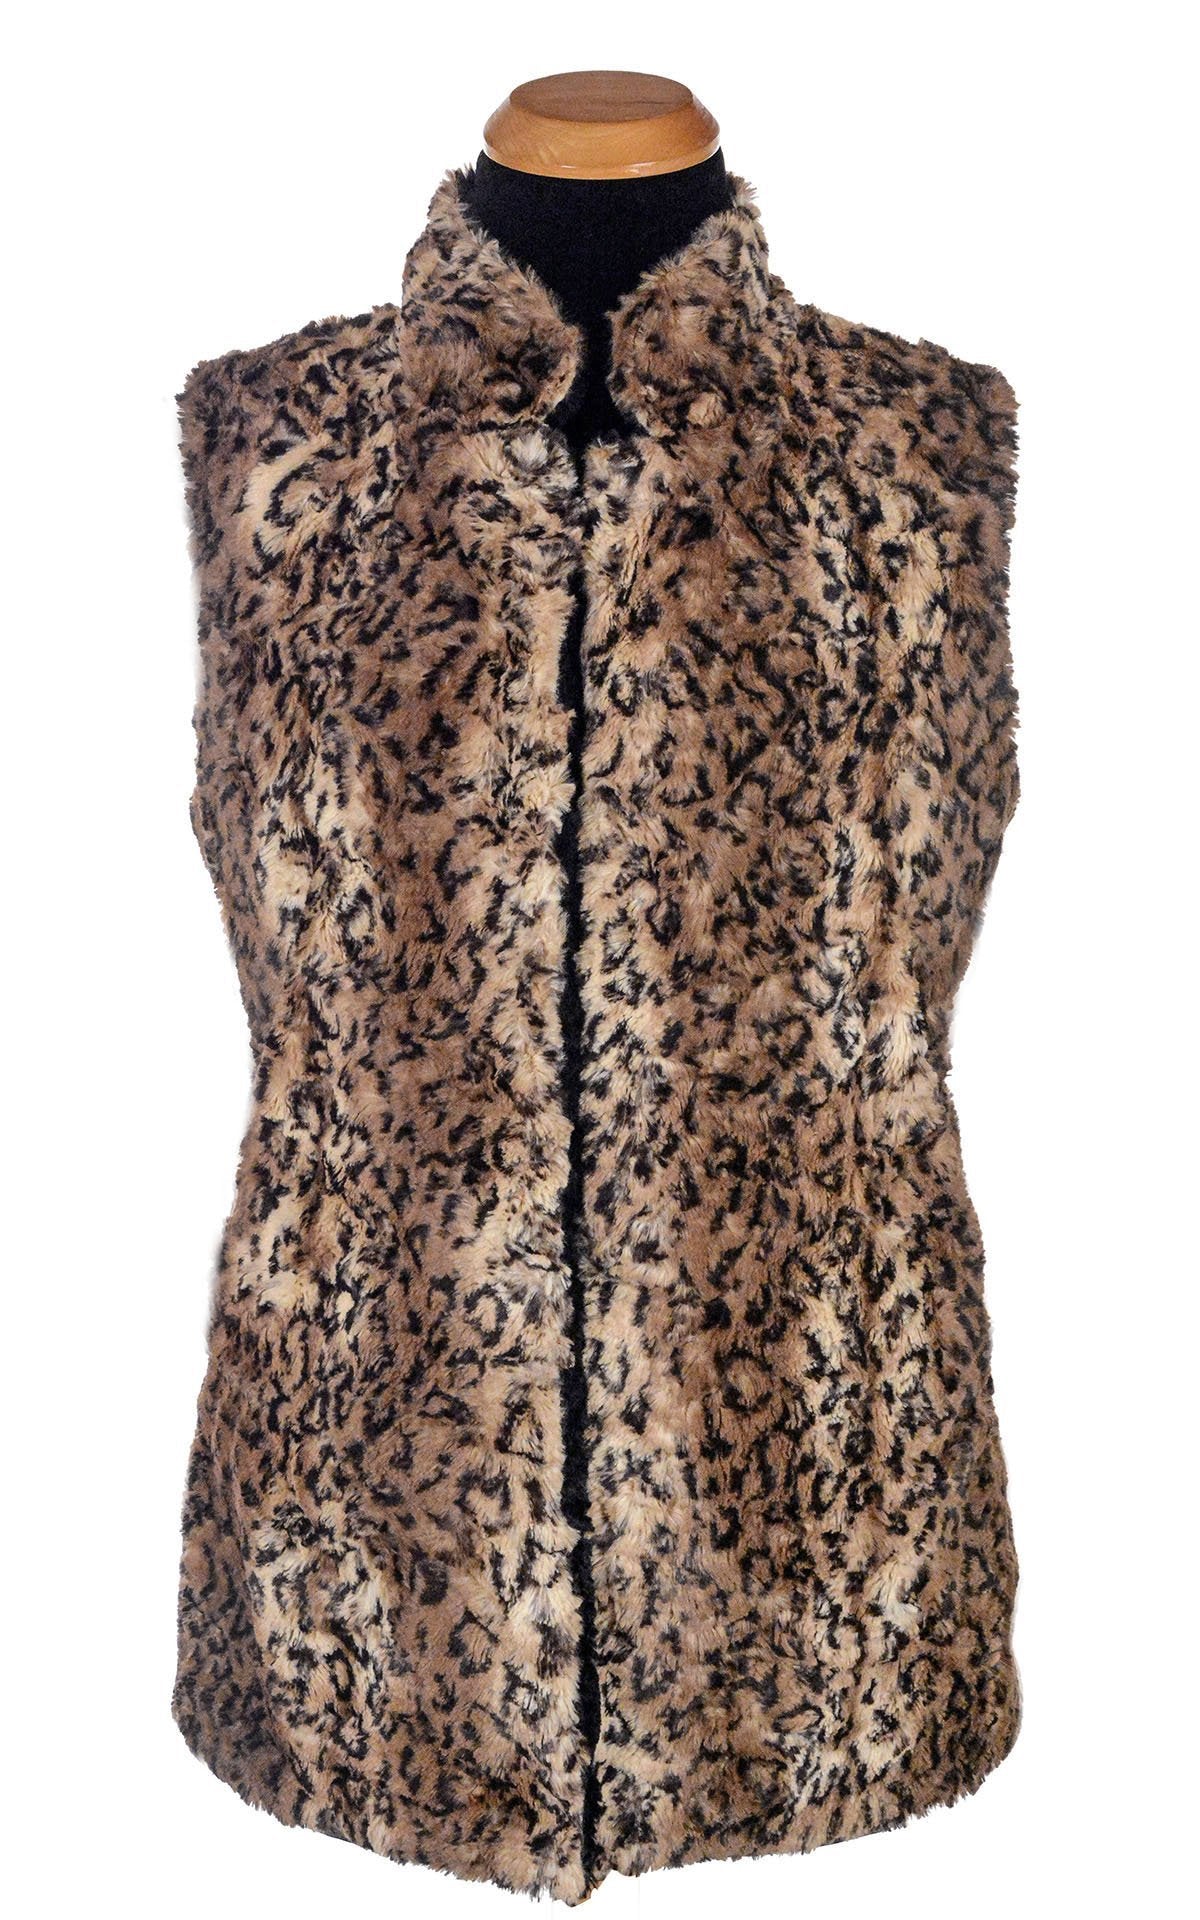 Mandarin Vest Short | Carpathian Lynx Brown, Tan, and Black Animal Print and Cuddly Black Faux Fur | Reversible | Handmade in Seattle WA | Pandemonium Millinery